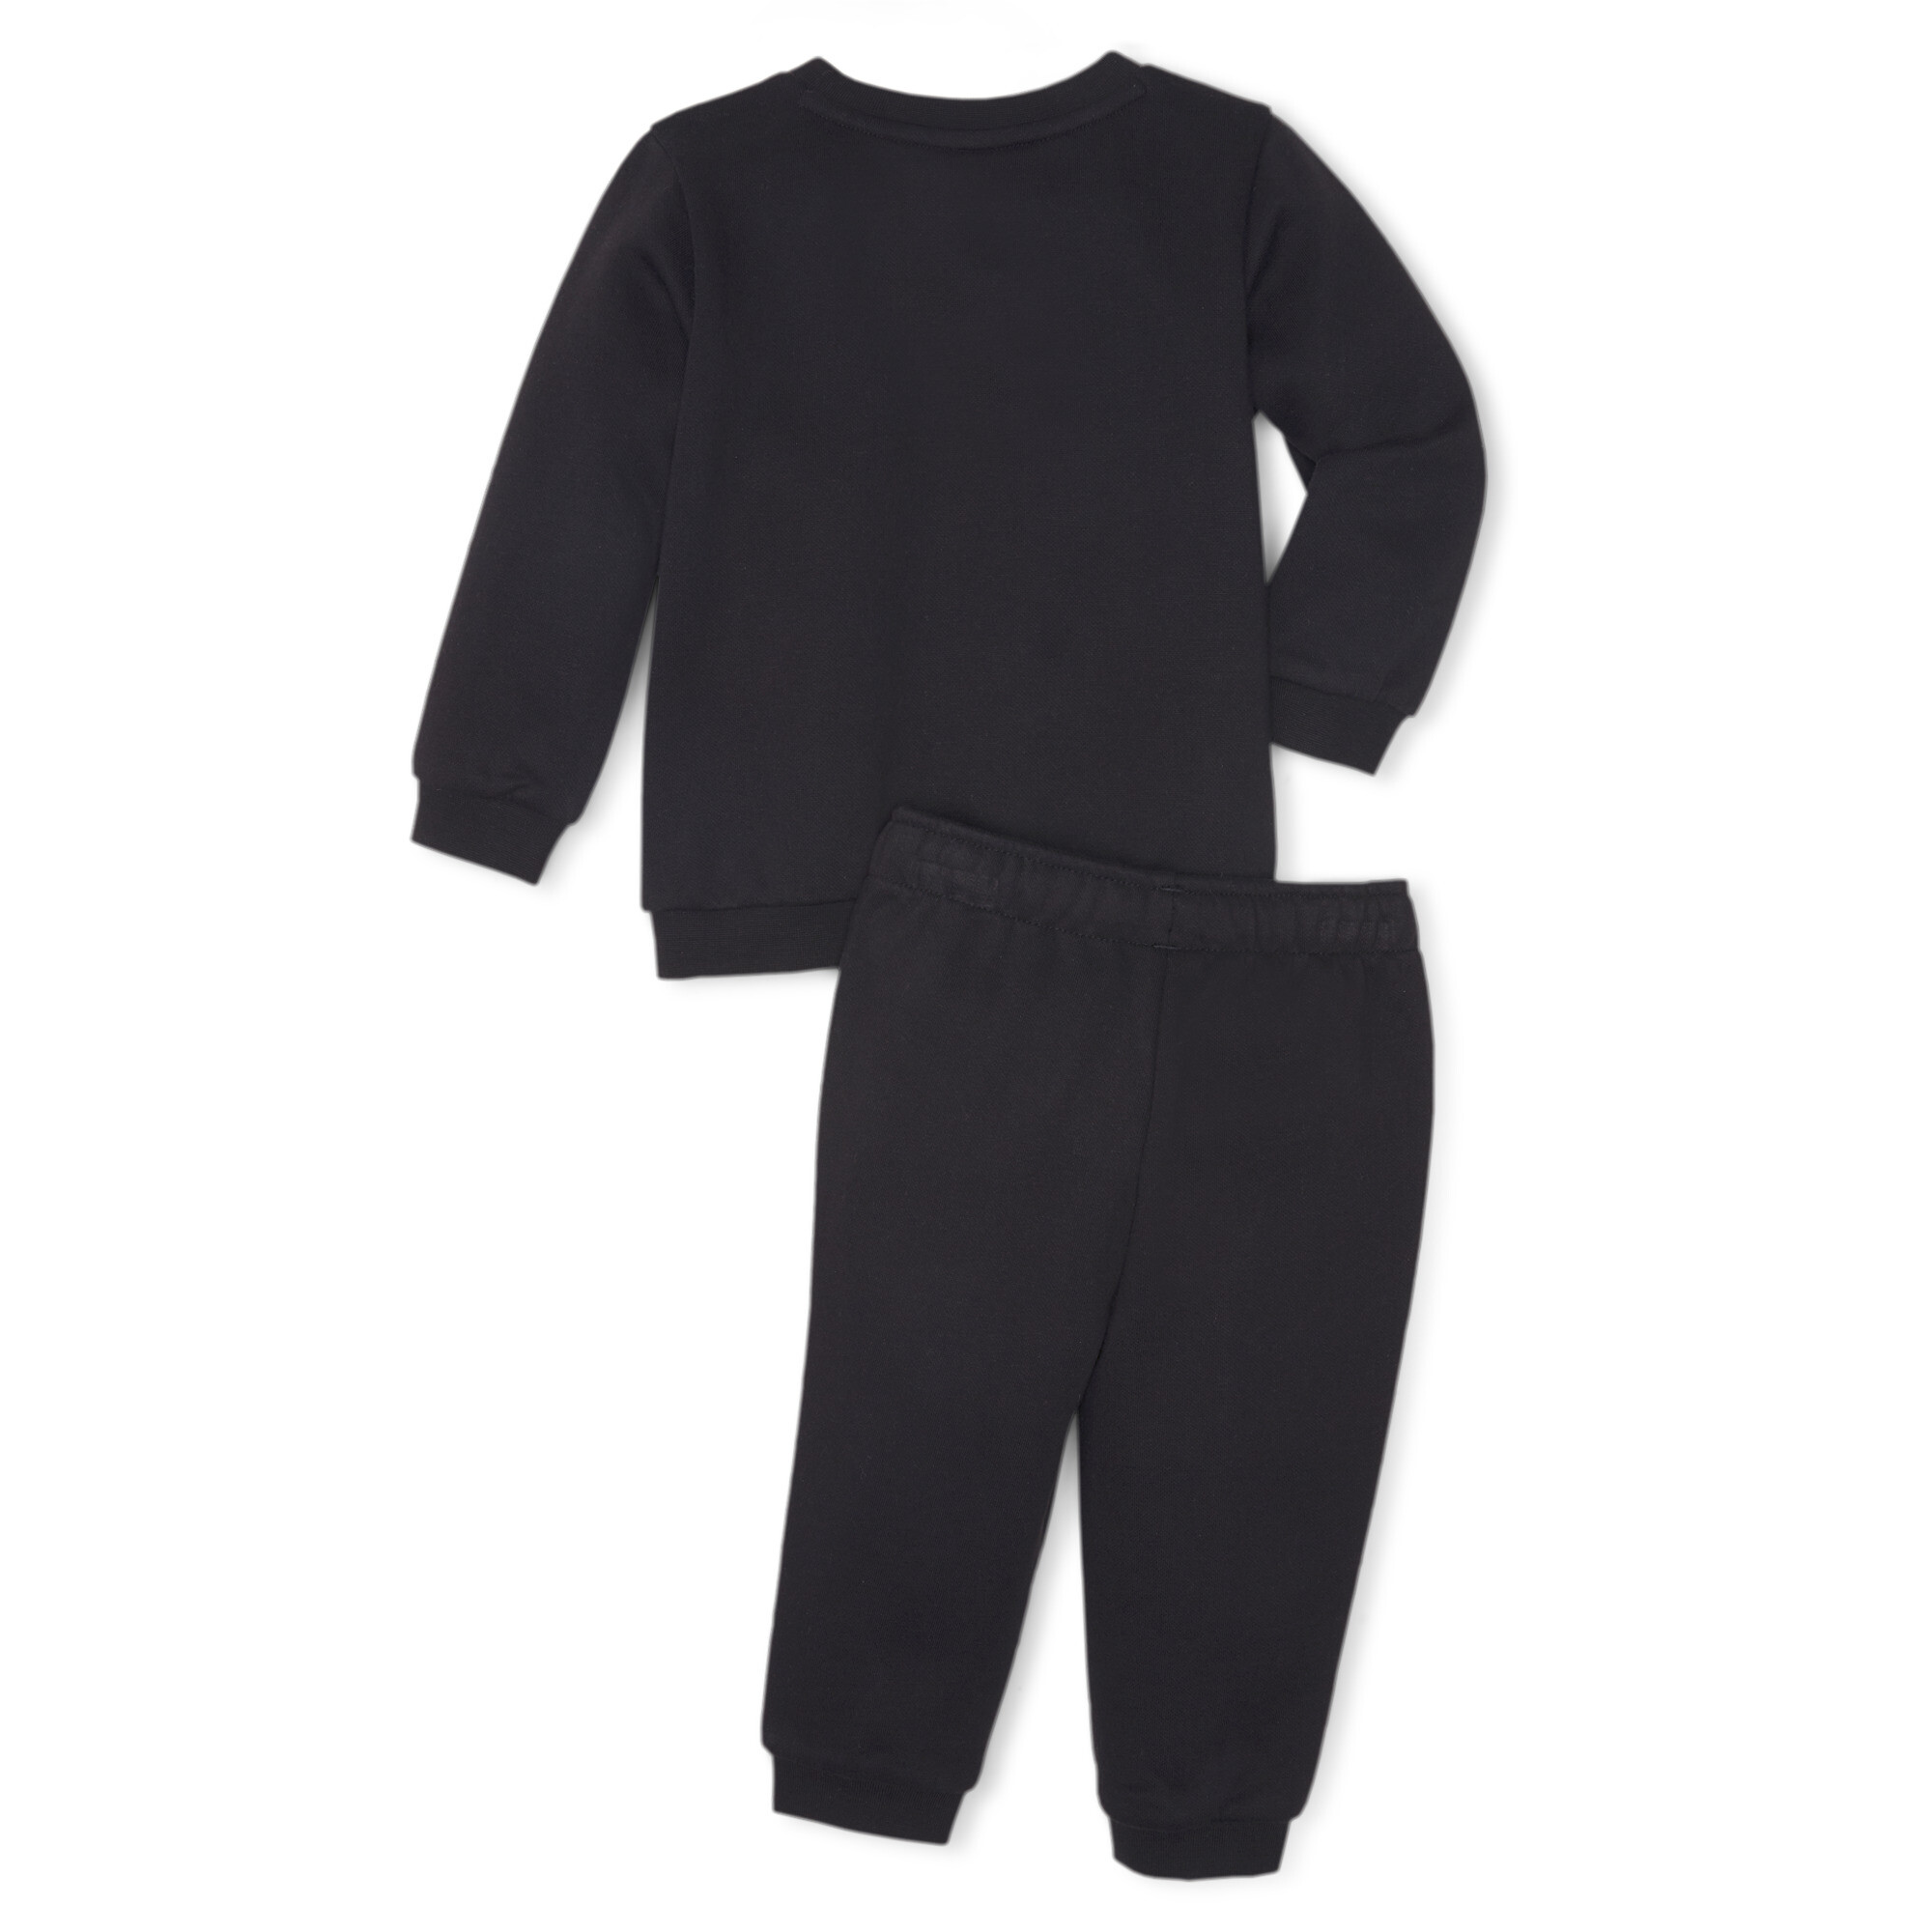 PUMA Essentials Minicats Crew Neck Babies' Jogger Suit In Black, Size 9-12 Months